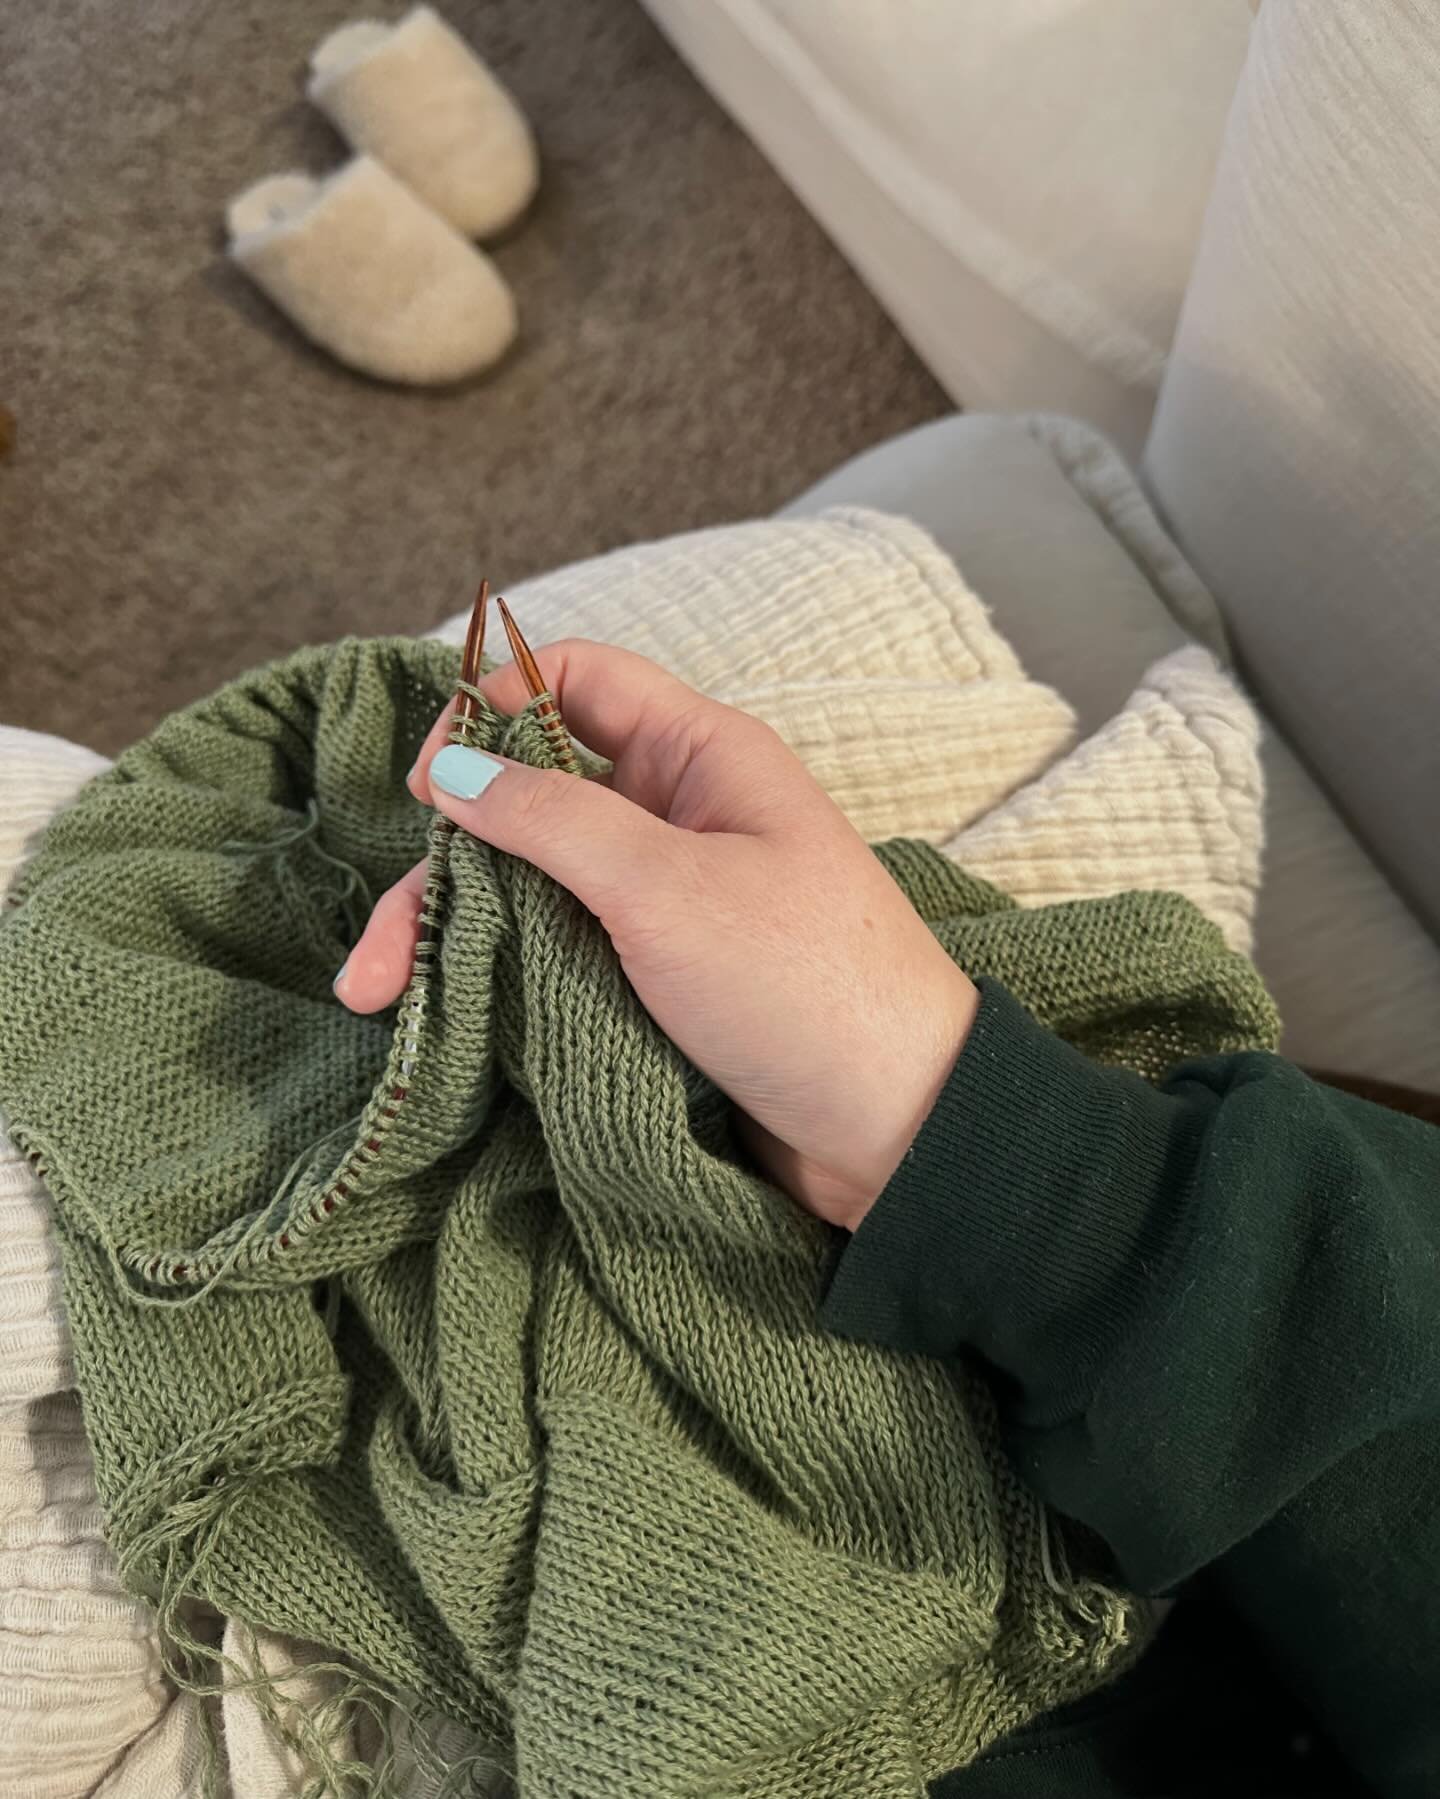 knitting mindless stockinette on my air tee is making me so happy 🌱

.
.
.
.
#airtee #ozettaknitwear #ozetta #sandnestynnline #sandnesgarn #springknits #springknitting #summerknitting #summerknits #knitting #knittinglove #handknit #handmade